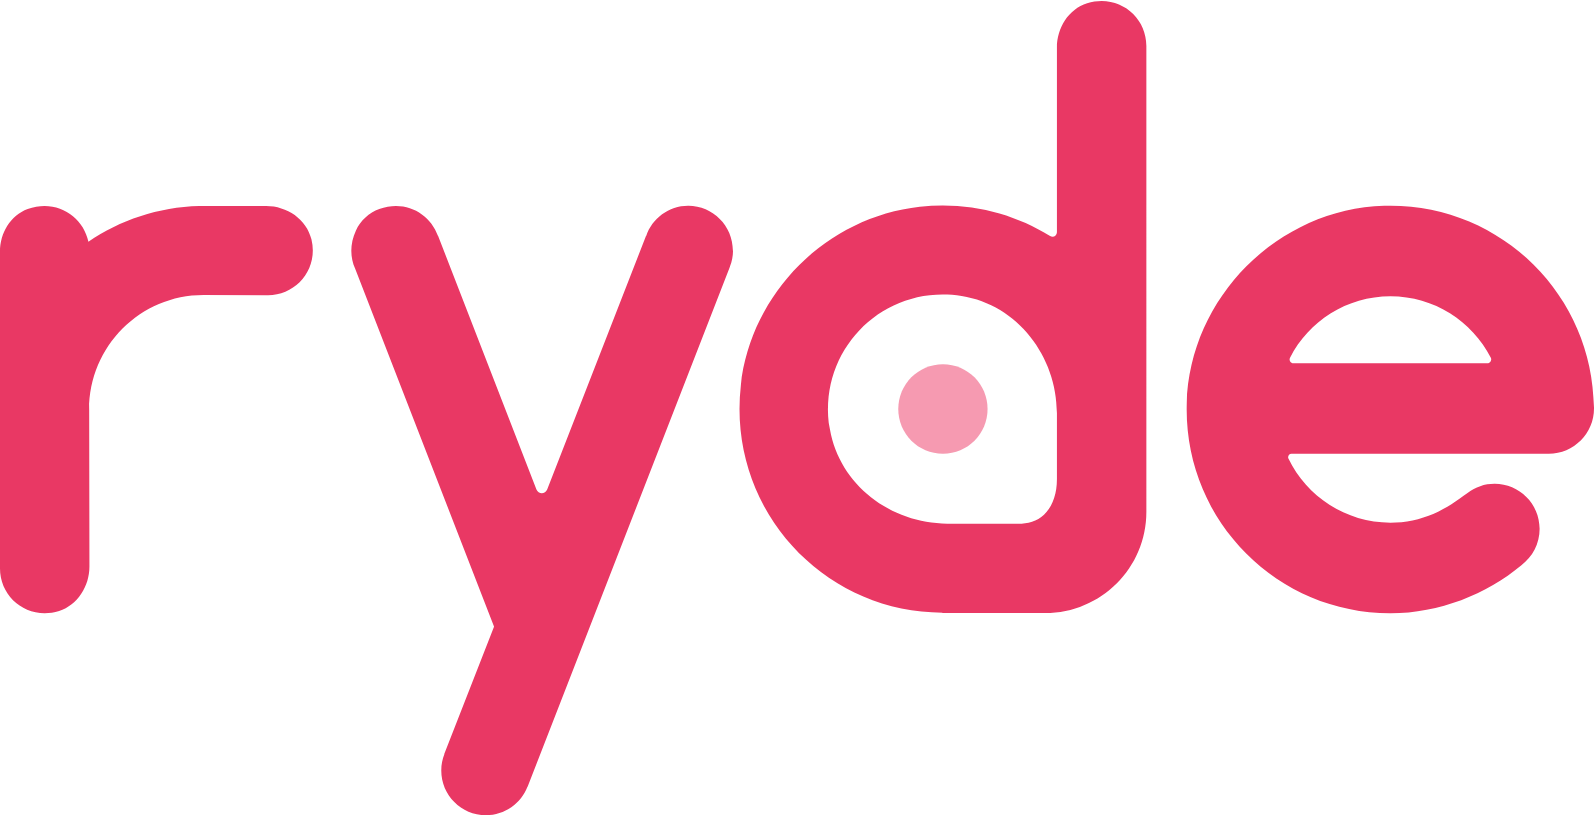 ryde logo (PNG transparent)